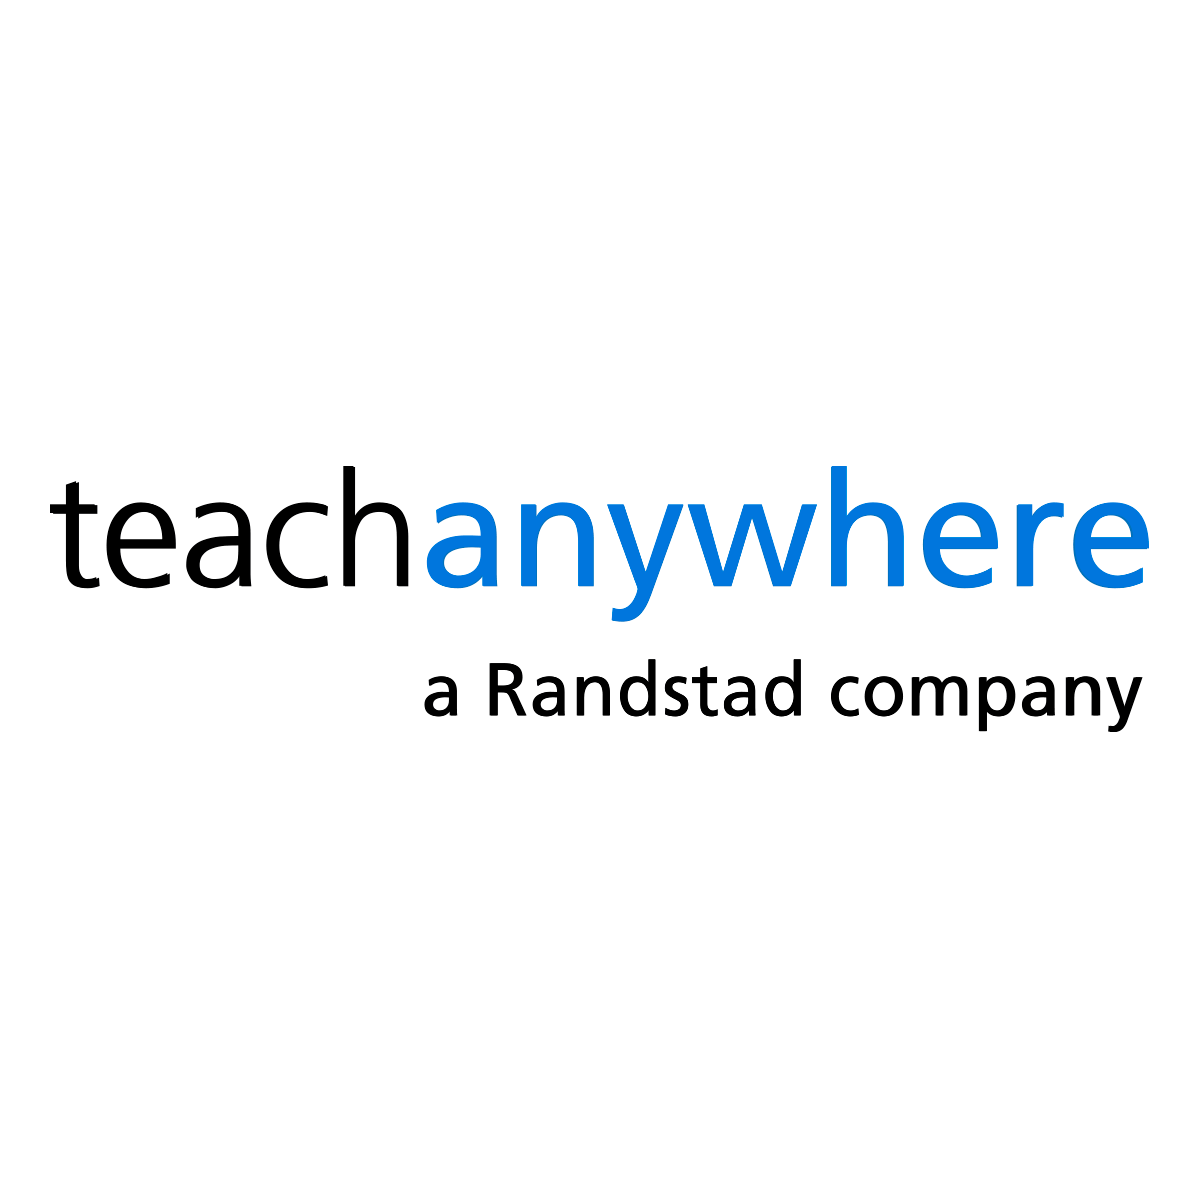 (c) Teachanywhere.com